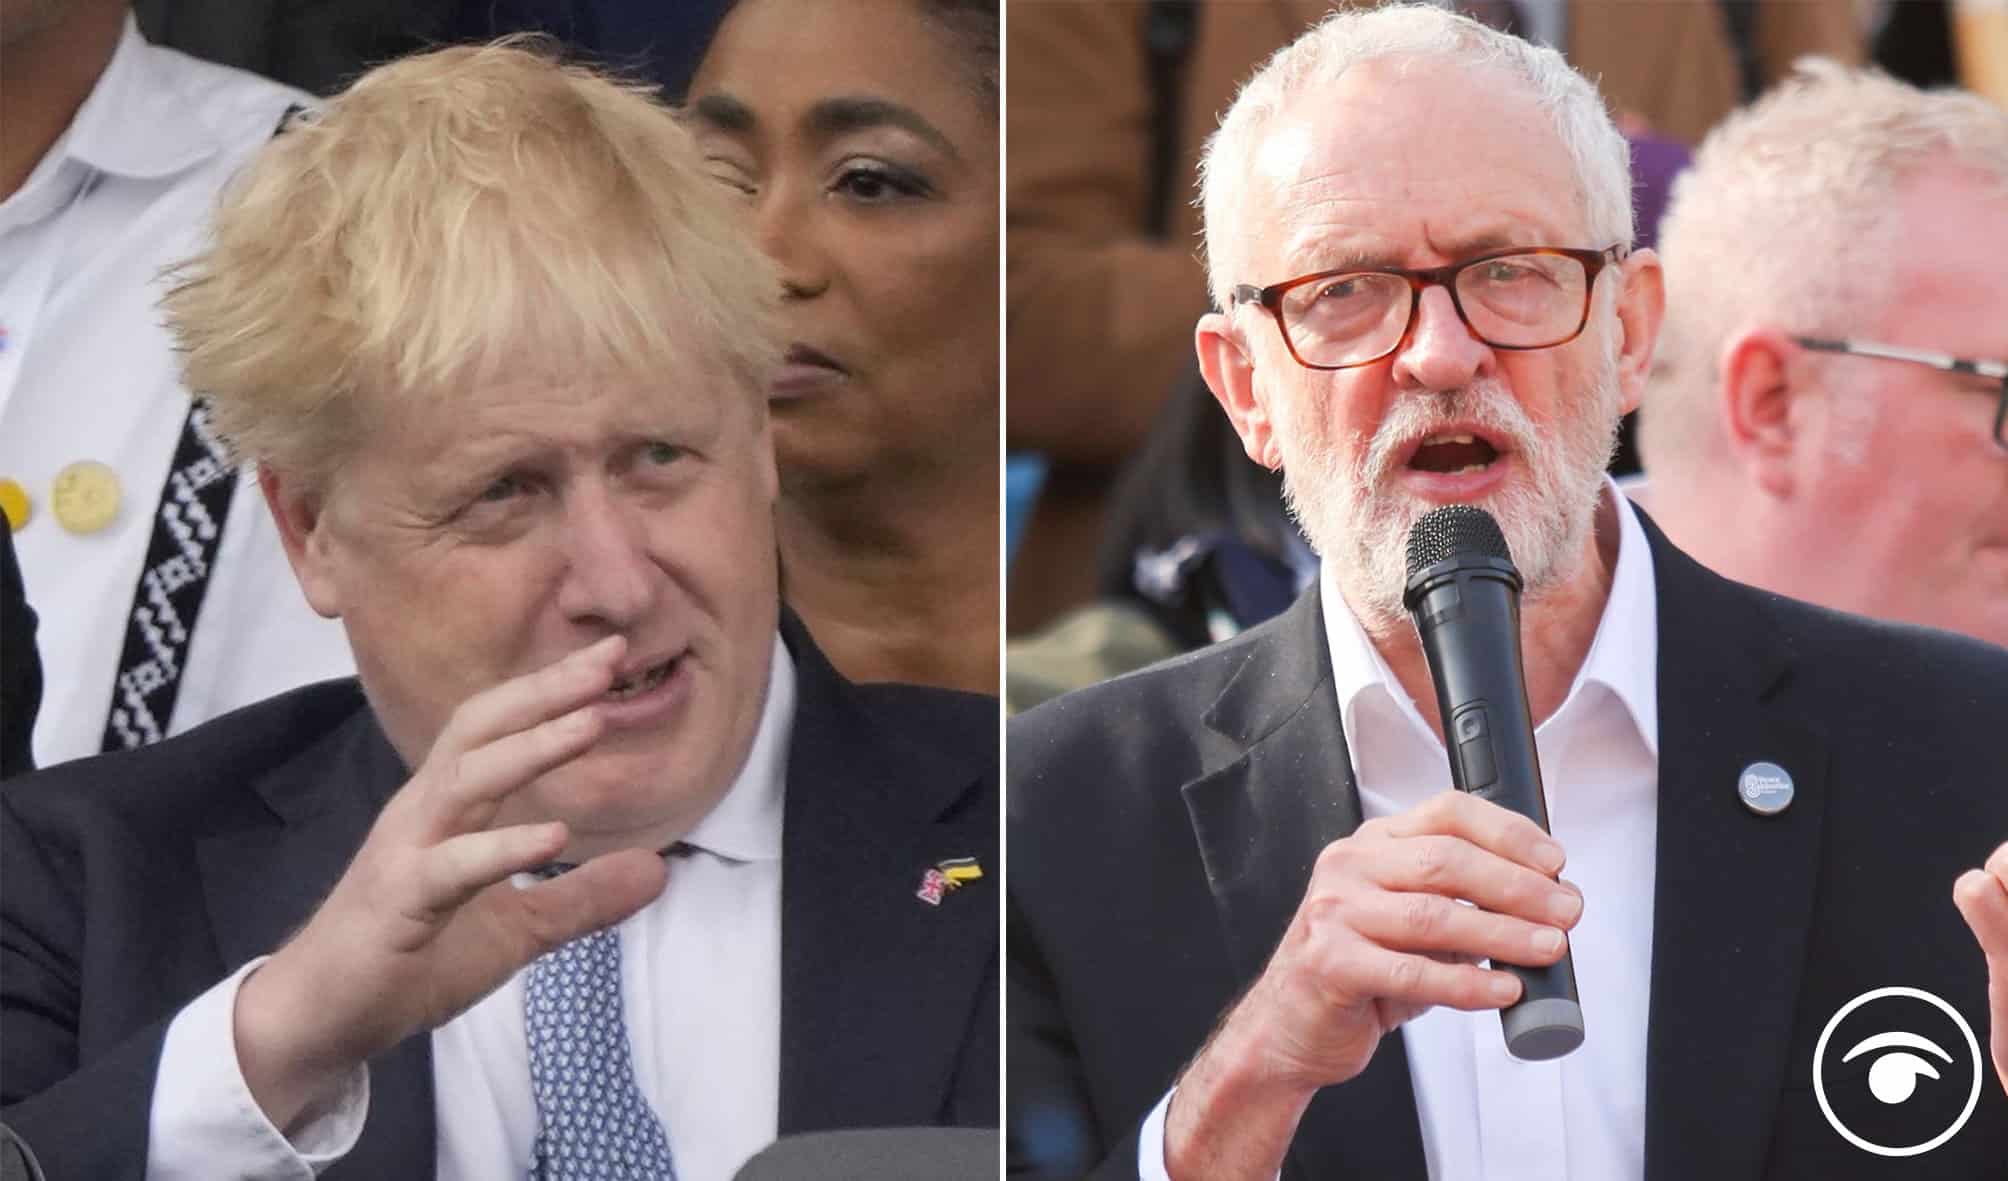 Confusion as PM dubbed ‘Conservative Corbyn’ and Lab figure calls Corbyn ‘sanctimonious’